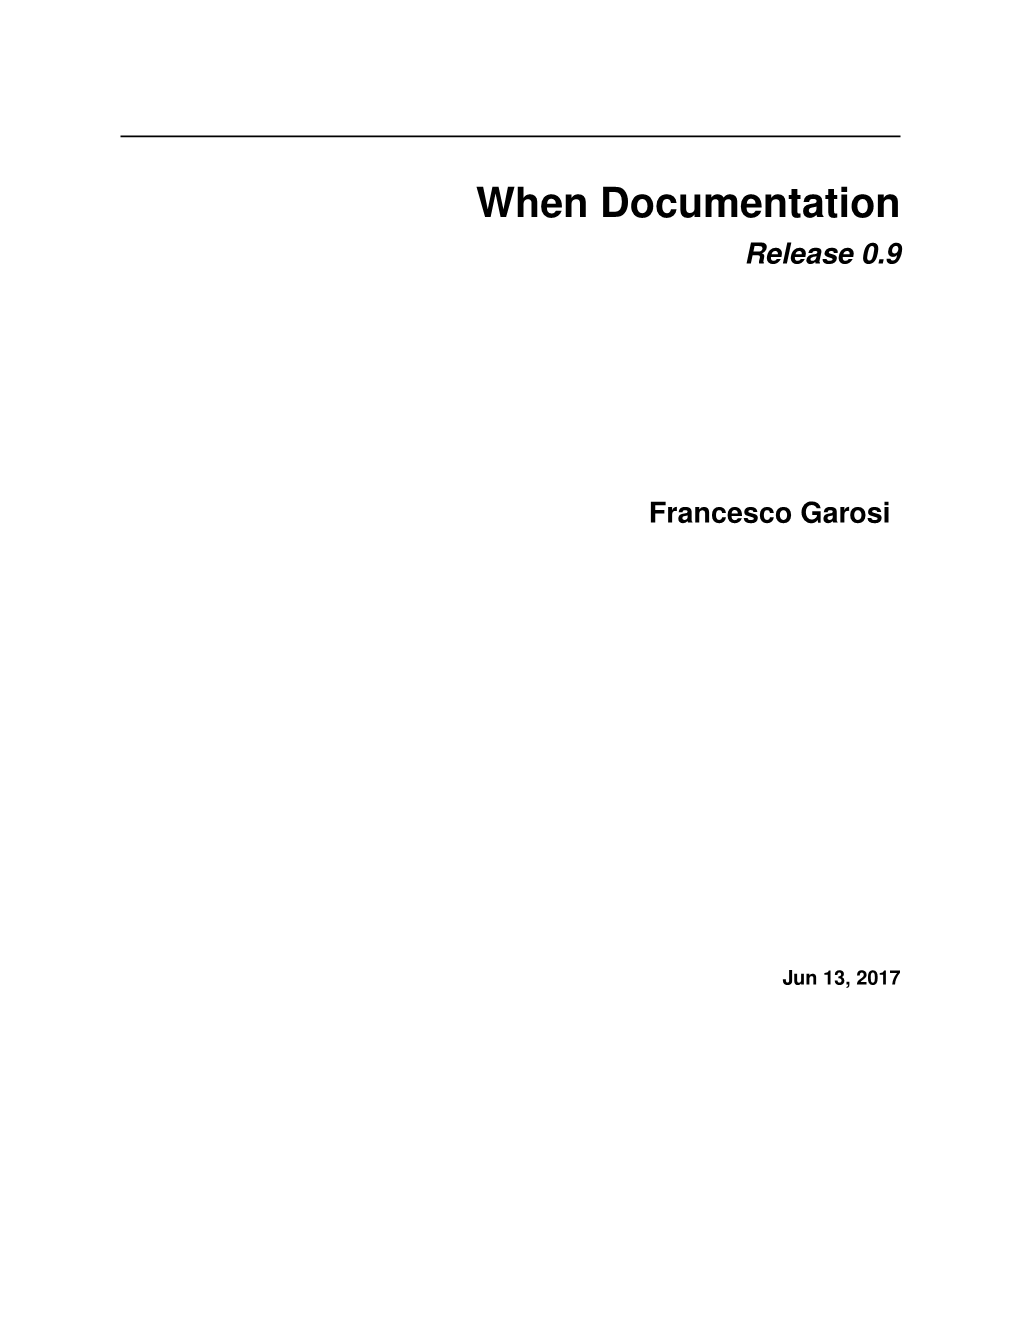 When Documentation Release 0.9